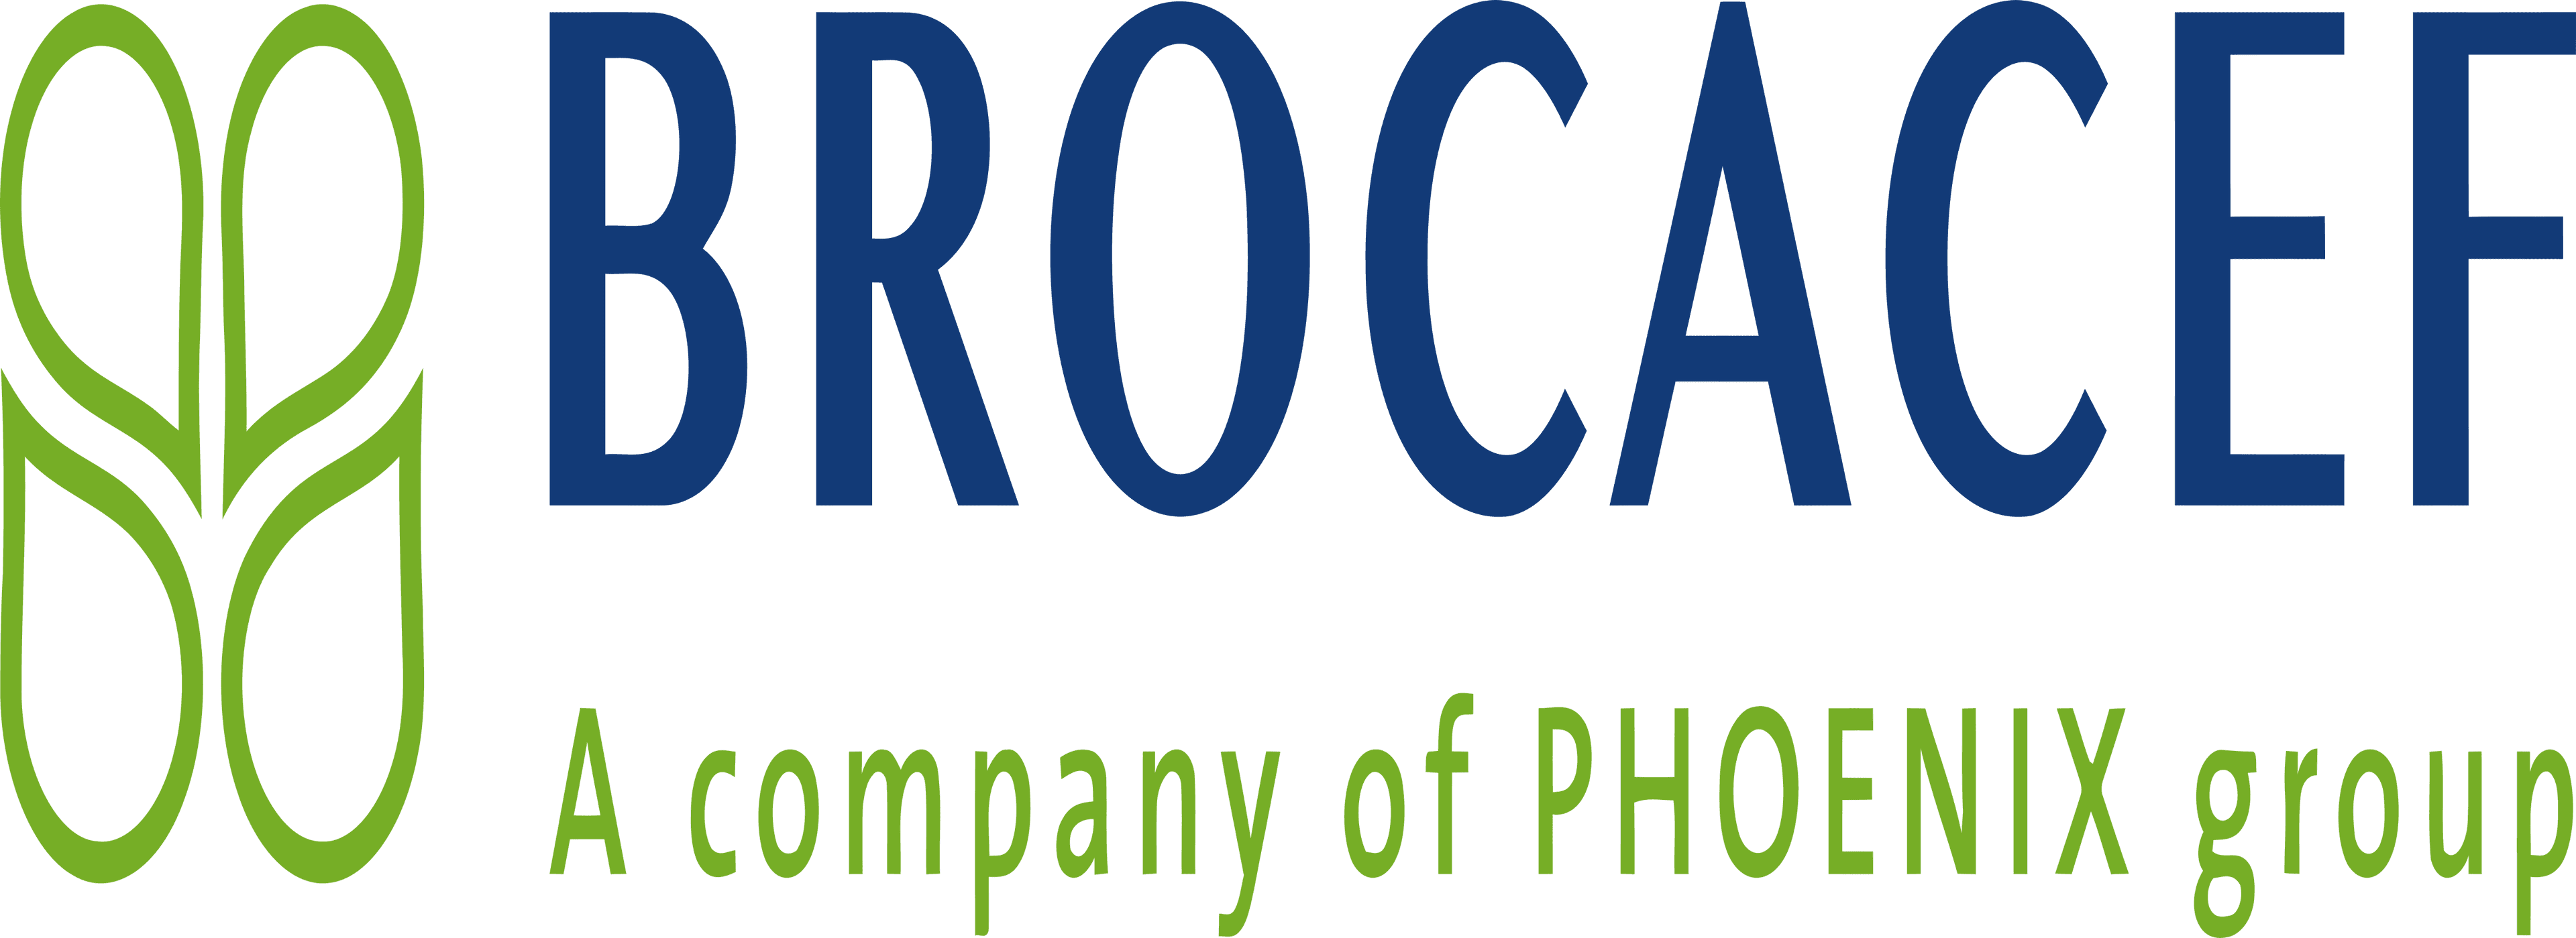 Brocacef-logo